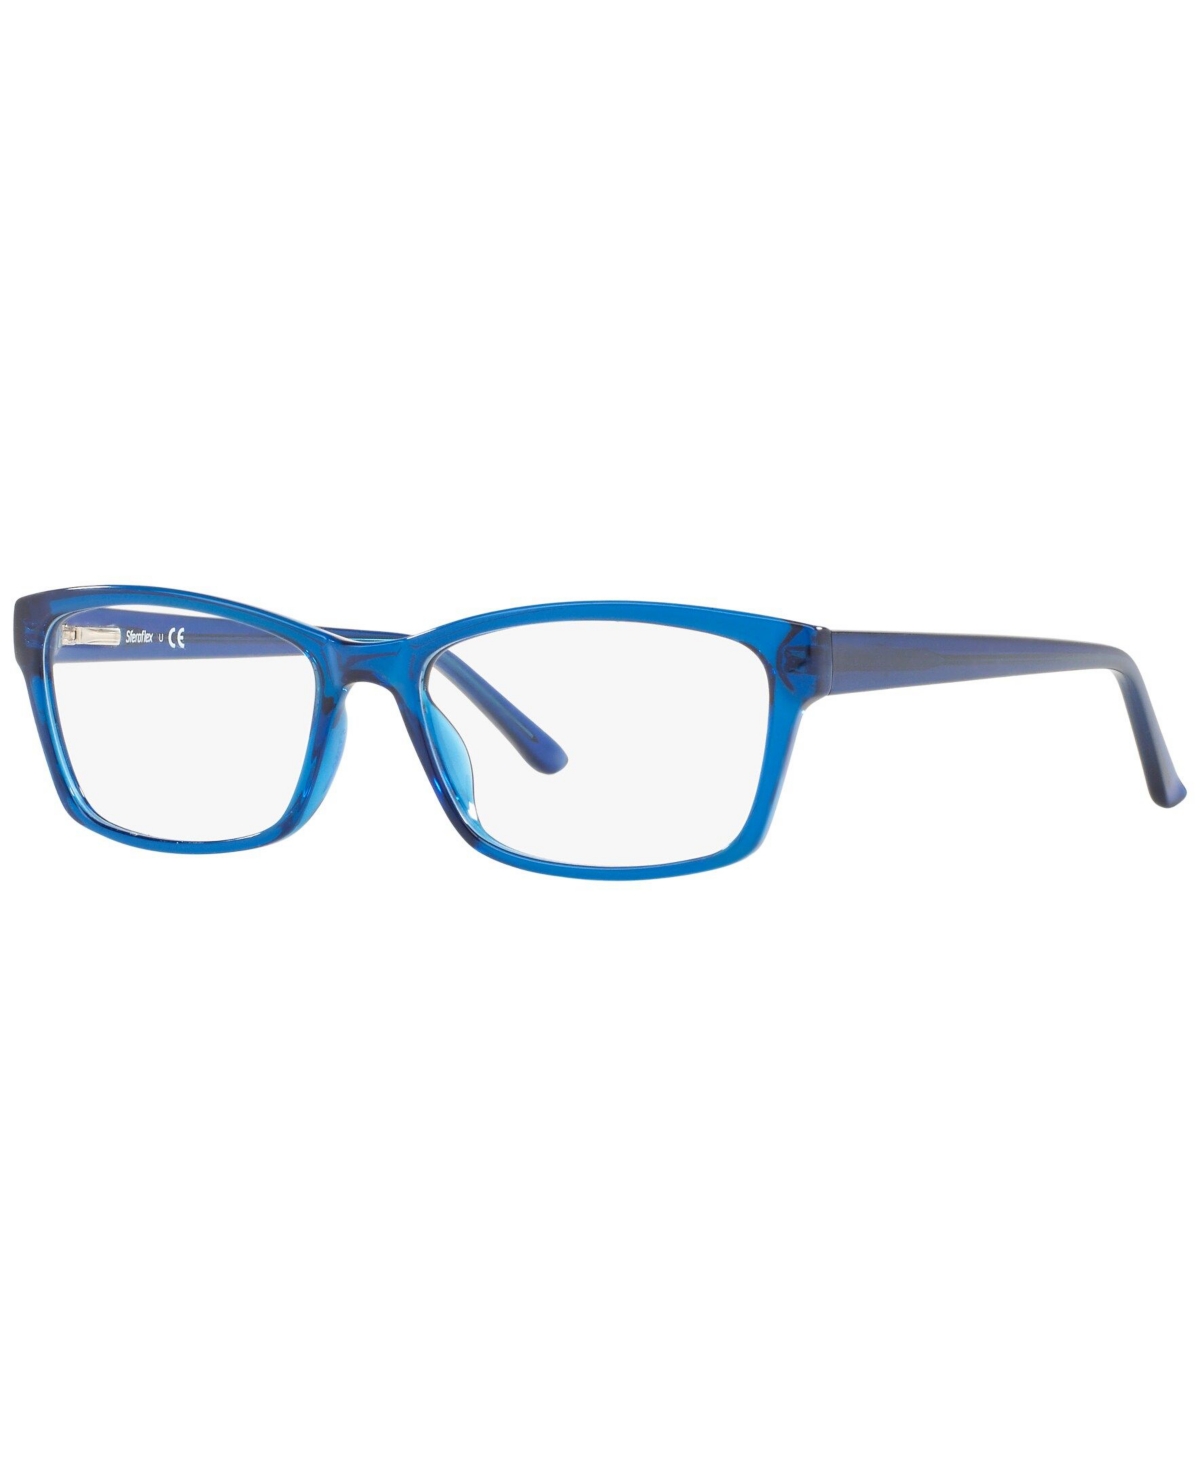 SF1568 Women's Square Eyeglasses - Blue